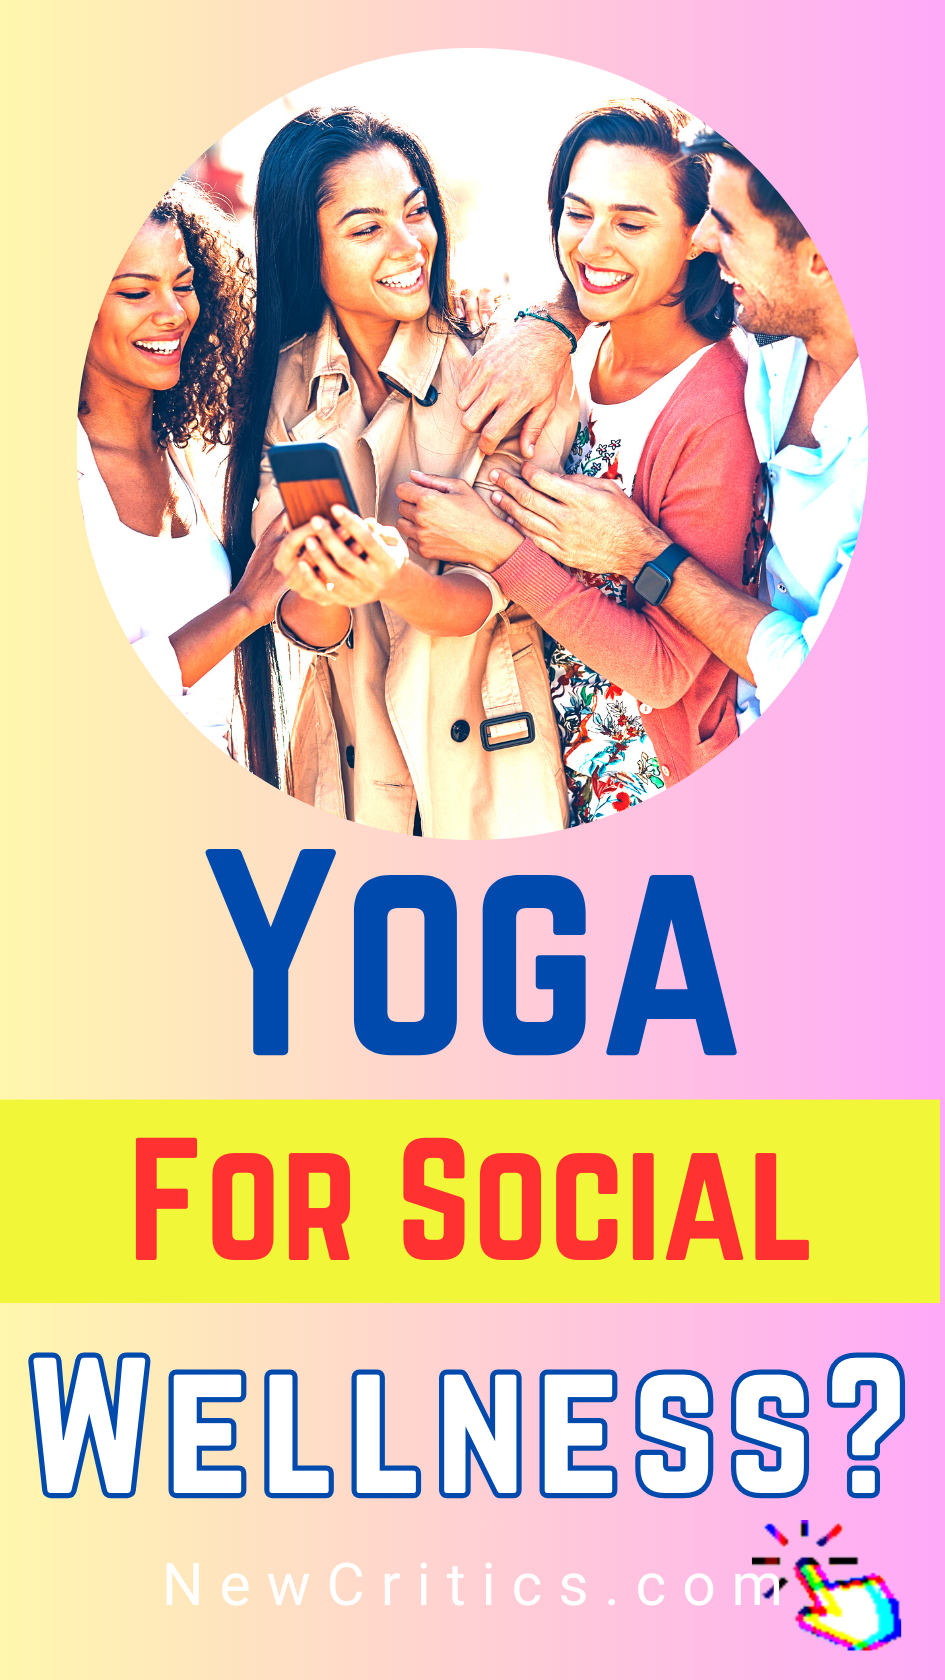 Social Wellness With Yoga / Canva